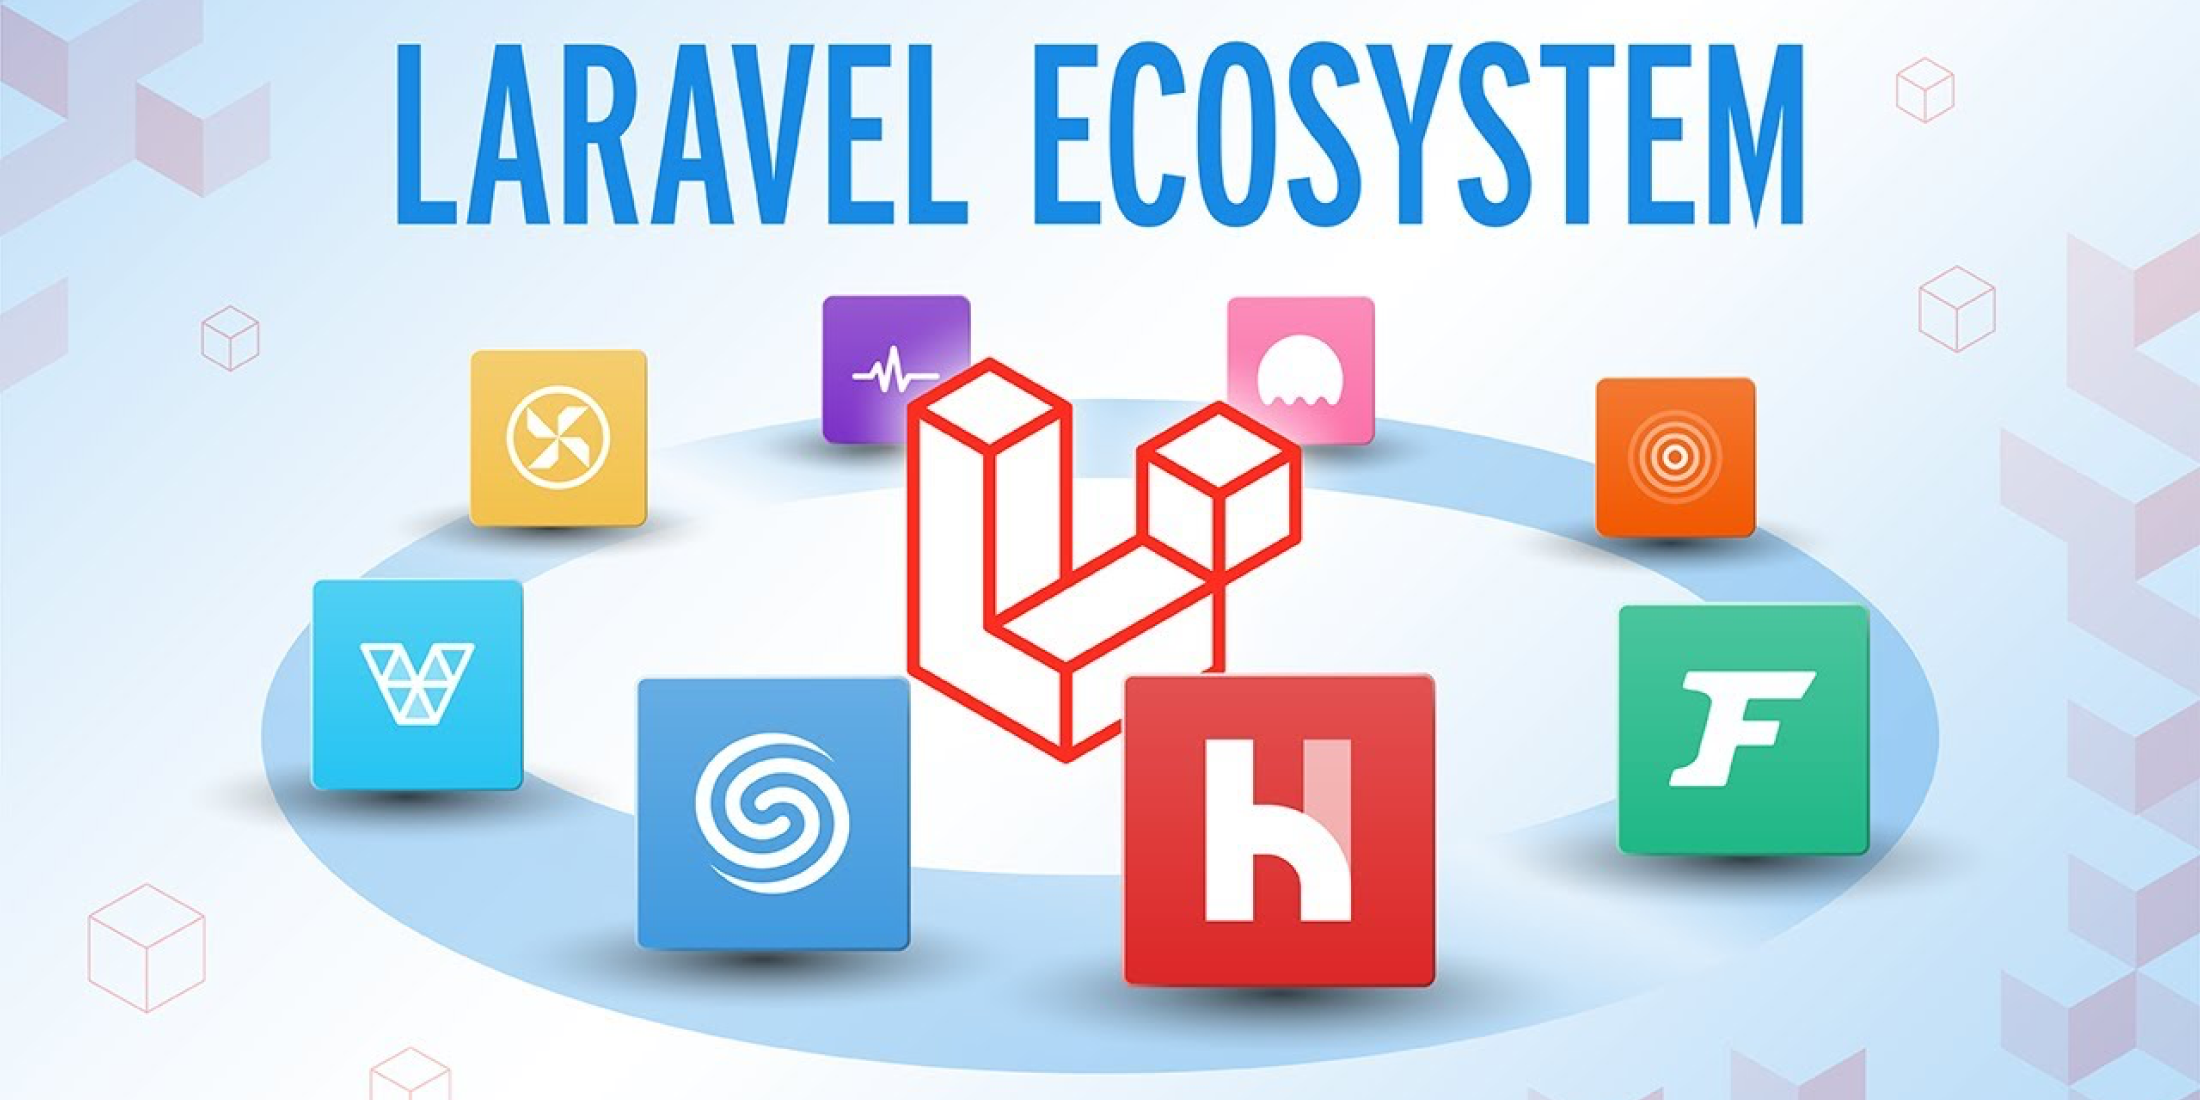 New Video Series: The Laravel Ecosystem